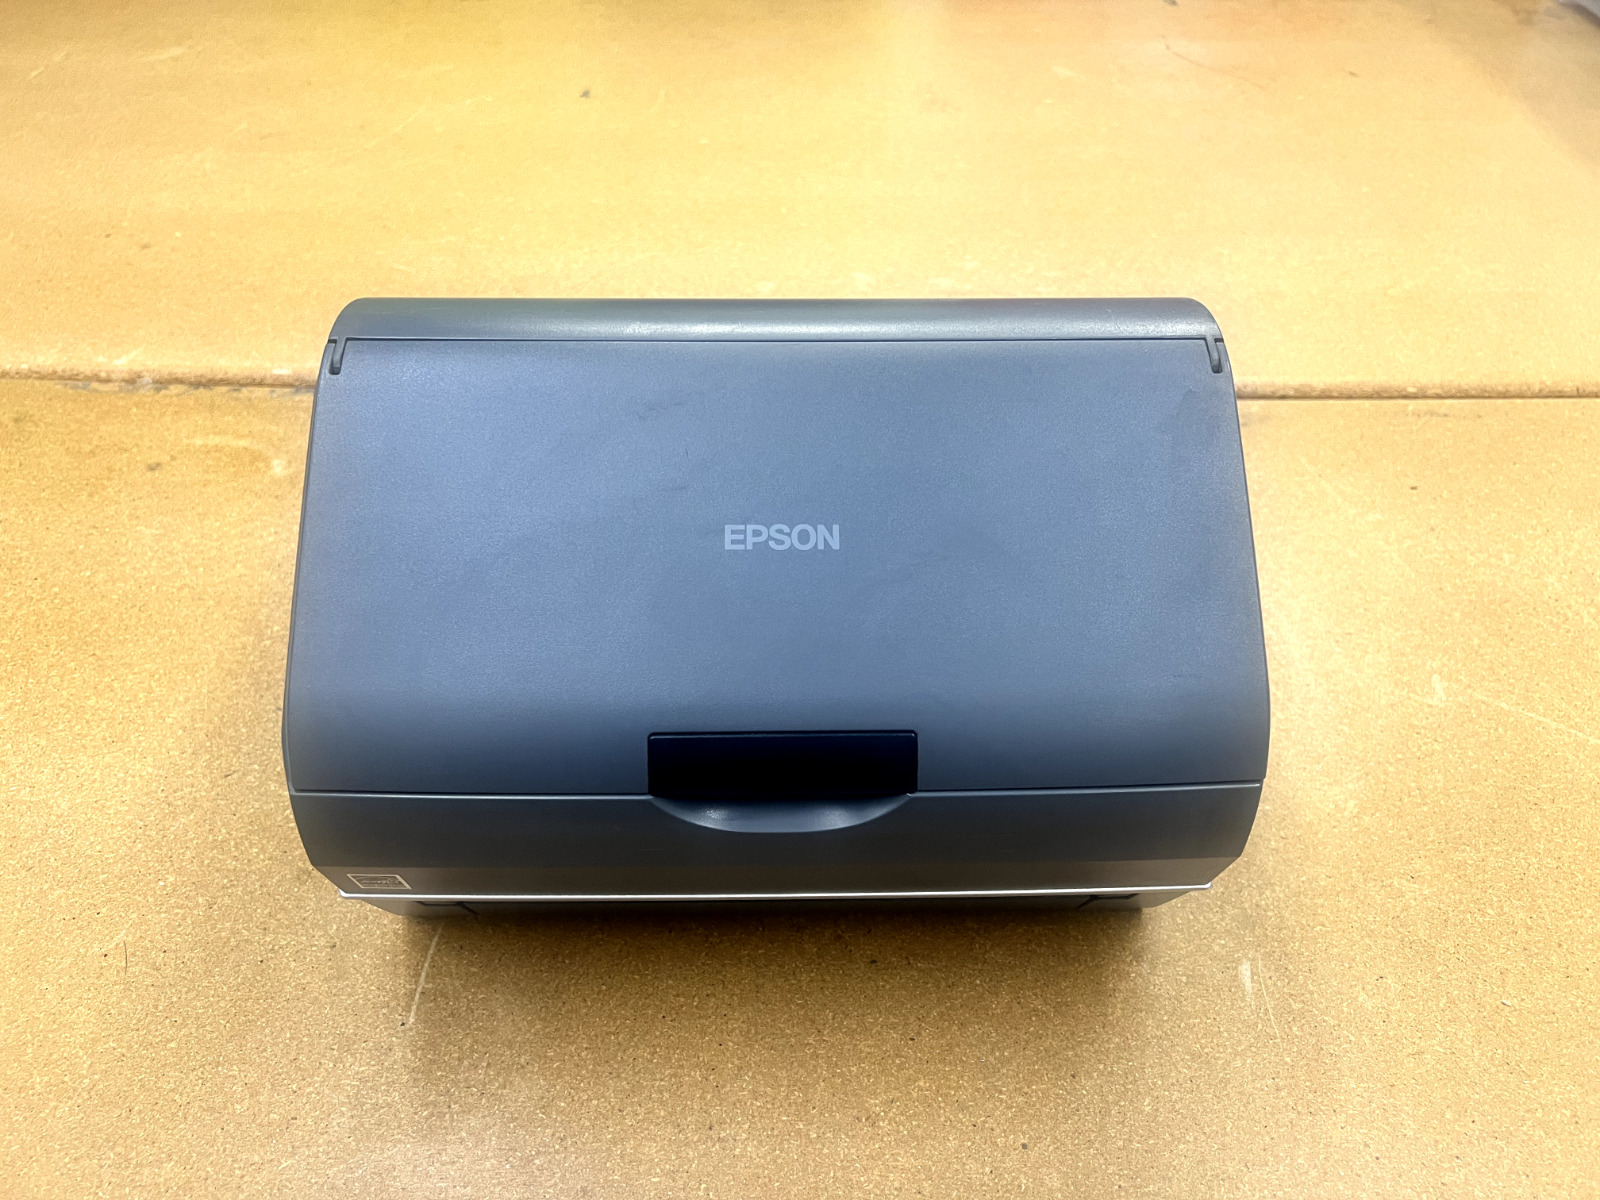 Epson WorkForce Pro GT-S50 Color Duplex Scanner - Tested Working